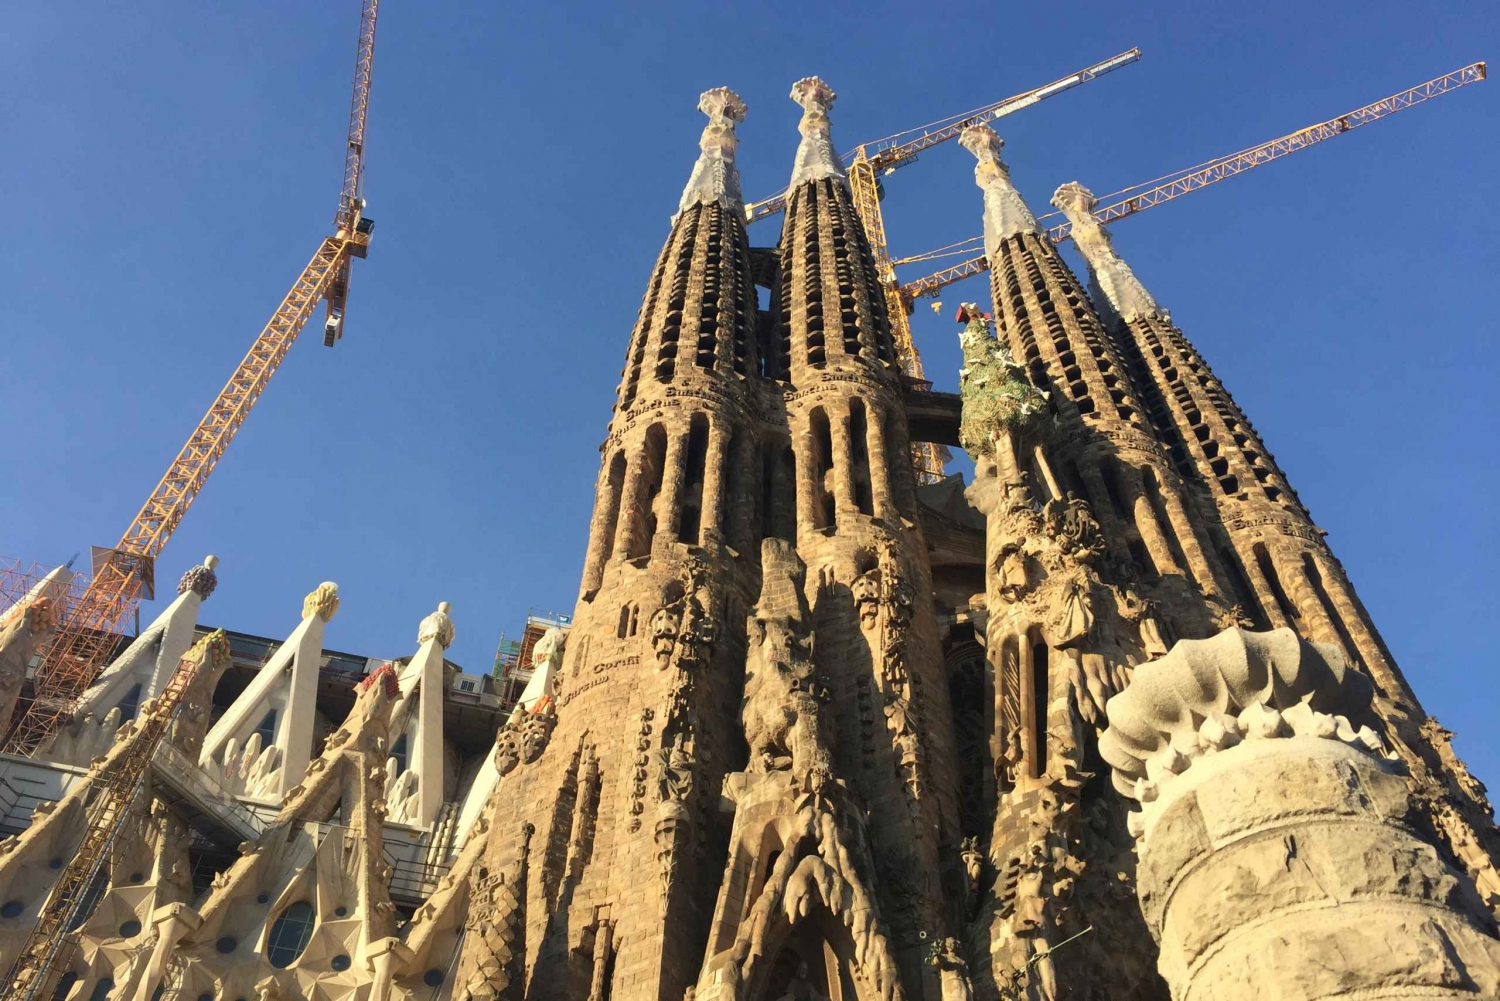 Montserrat & Artistic Barcelona: the Best of Gaudí